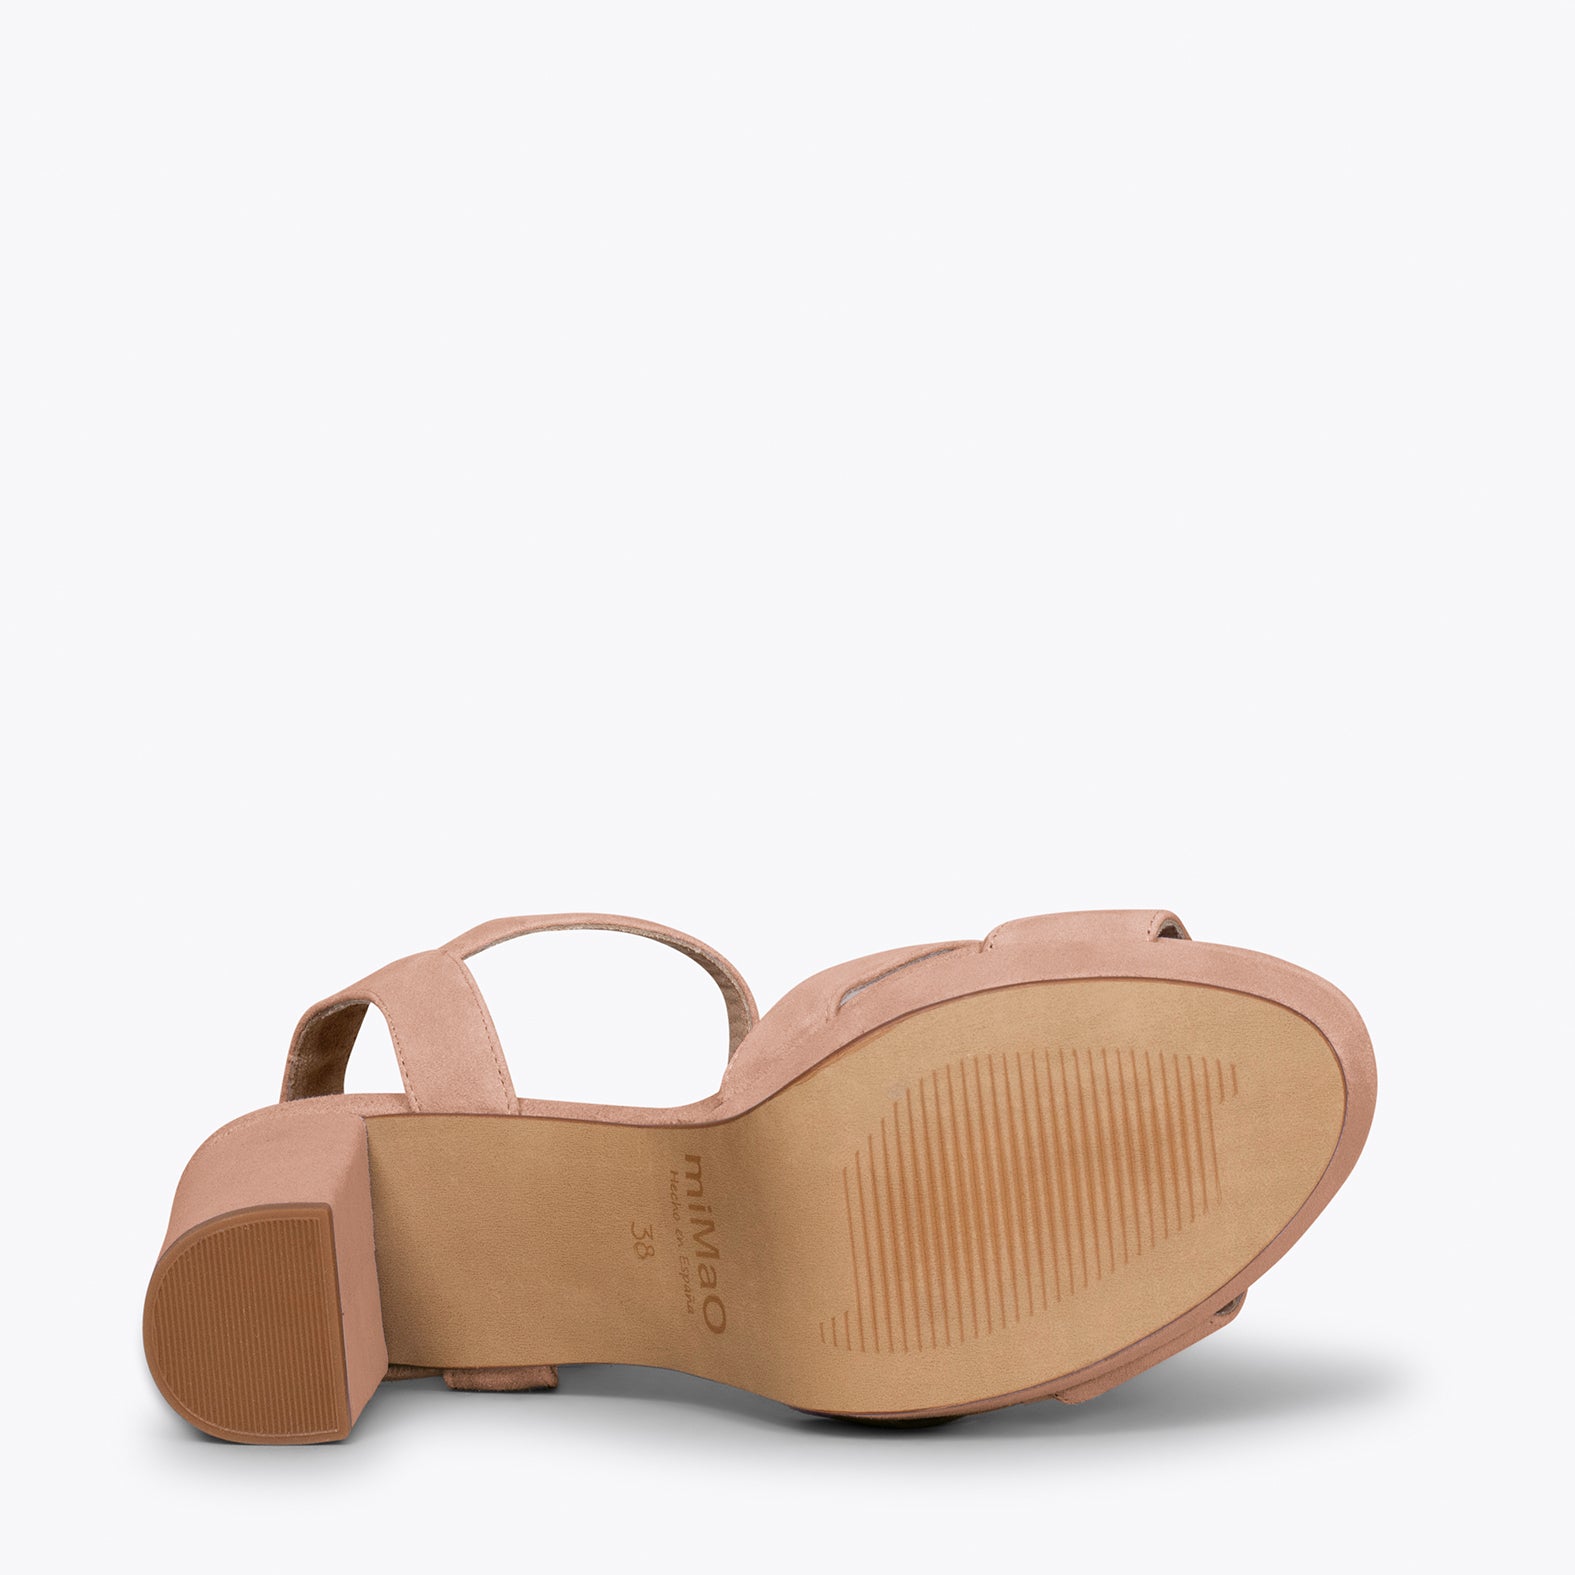 PARIS – NUDE high heel sandal with platform